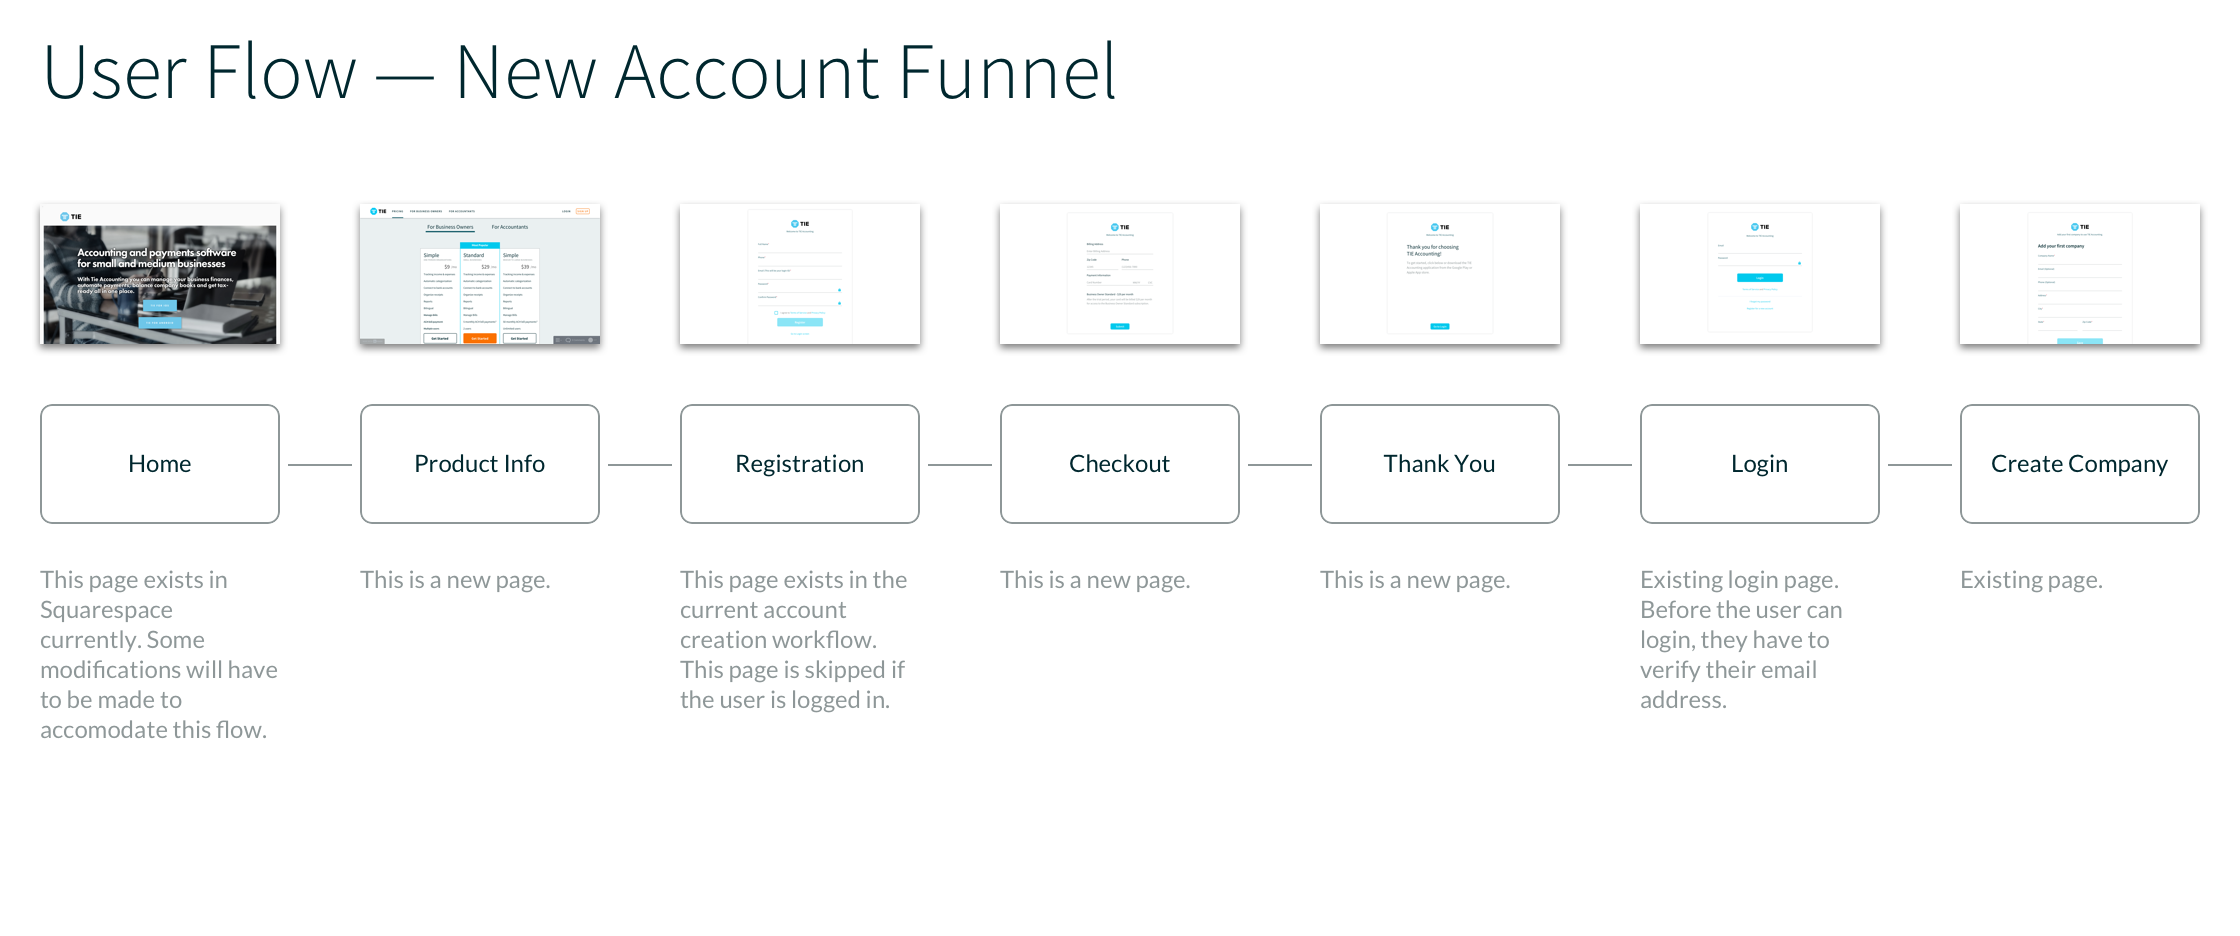 User Flow -- Account Funnel